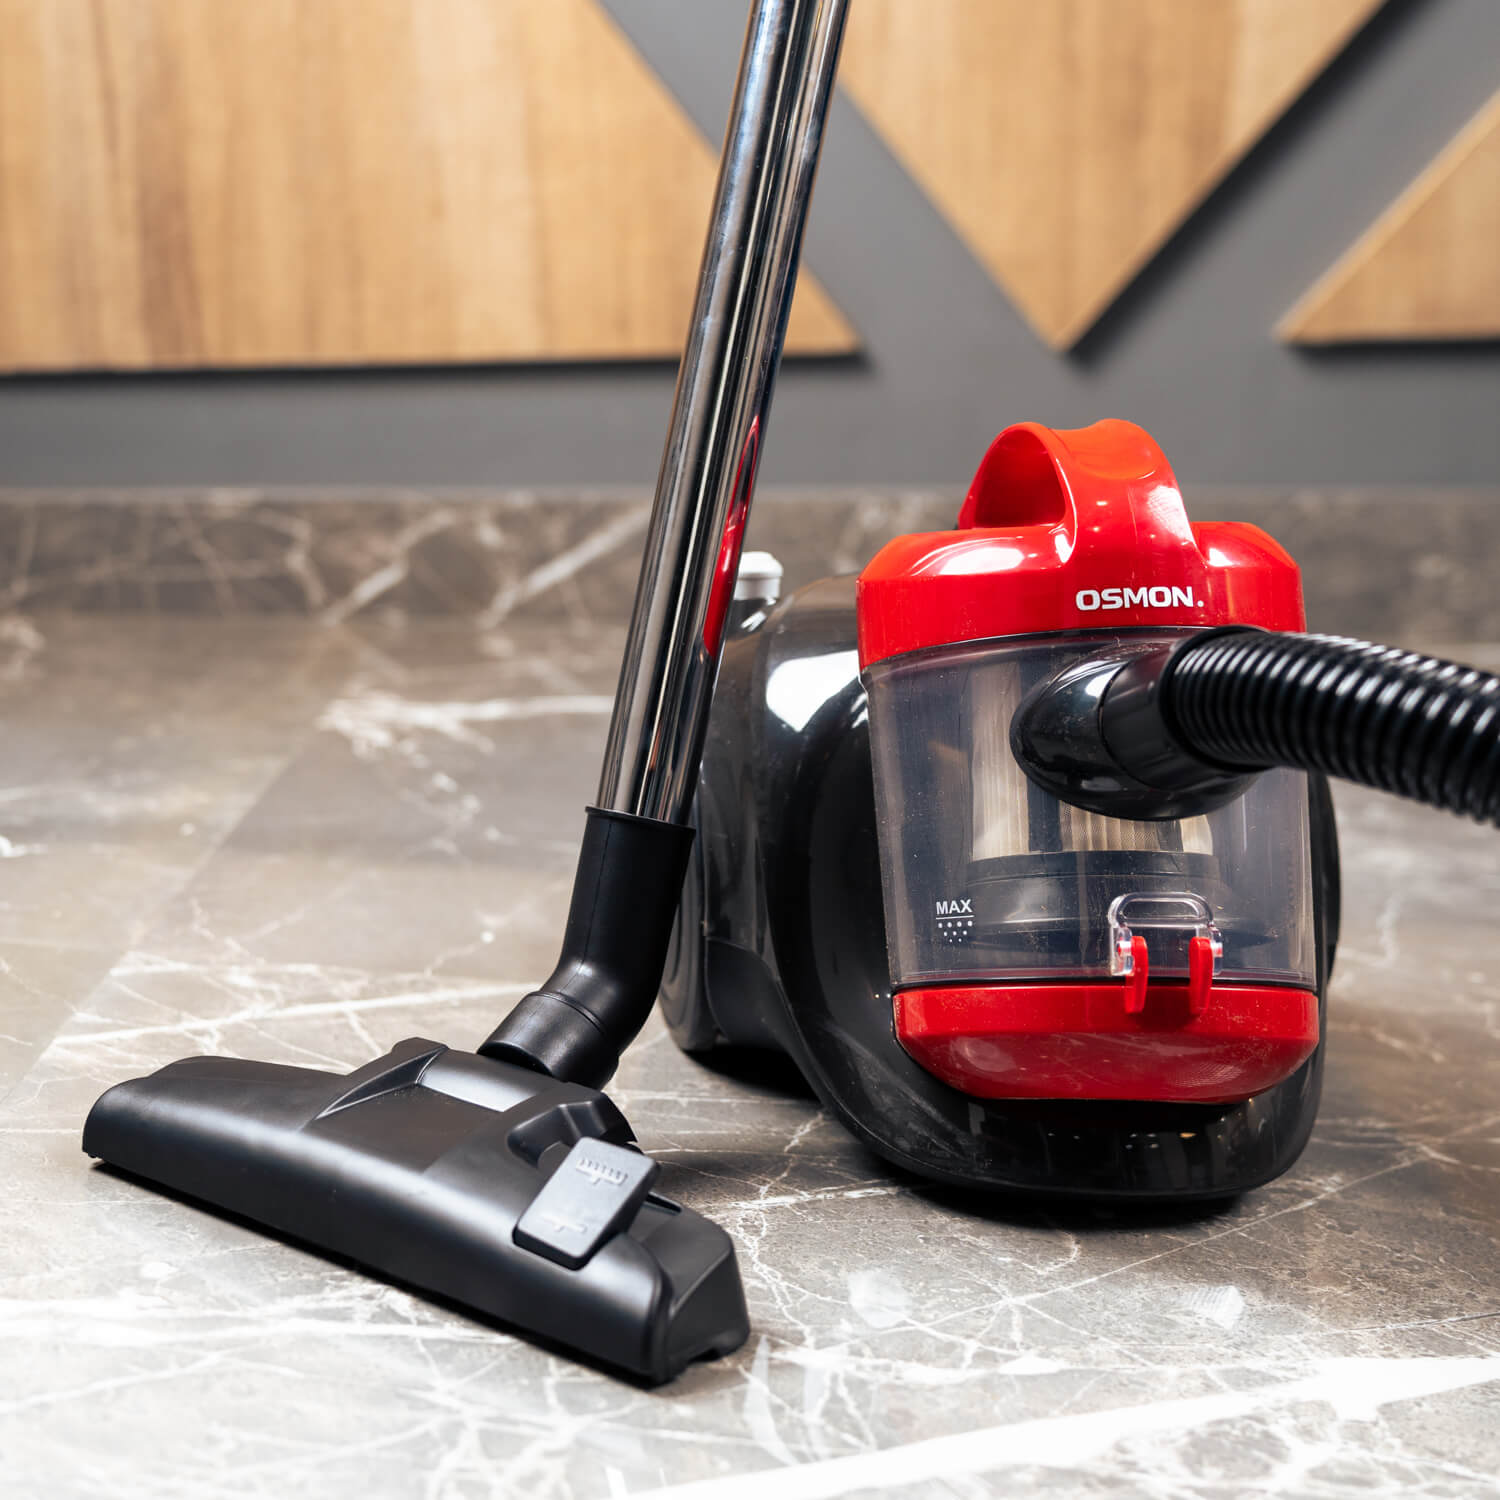 A sleek and powerful red and black vacuum cleaner, the Osmon 1400 Watt Bagless Cyclonic Vacuum Cleaner.